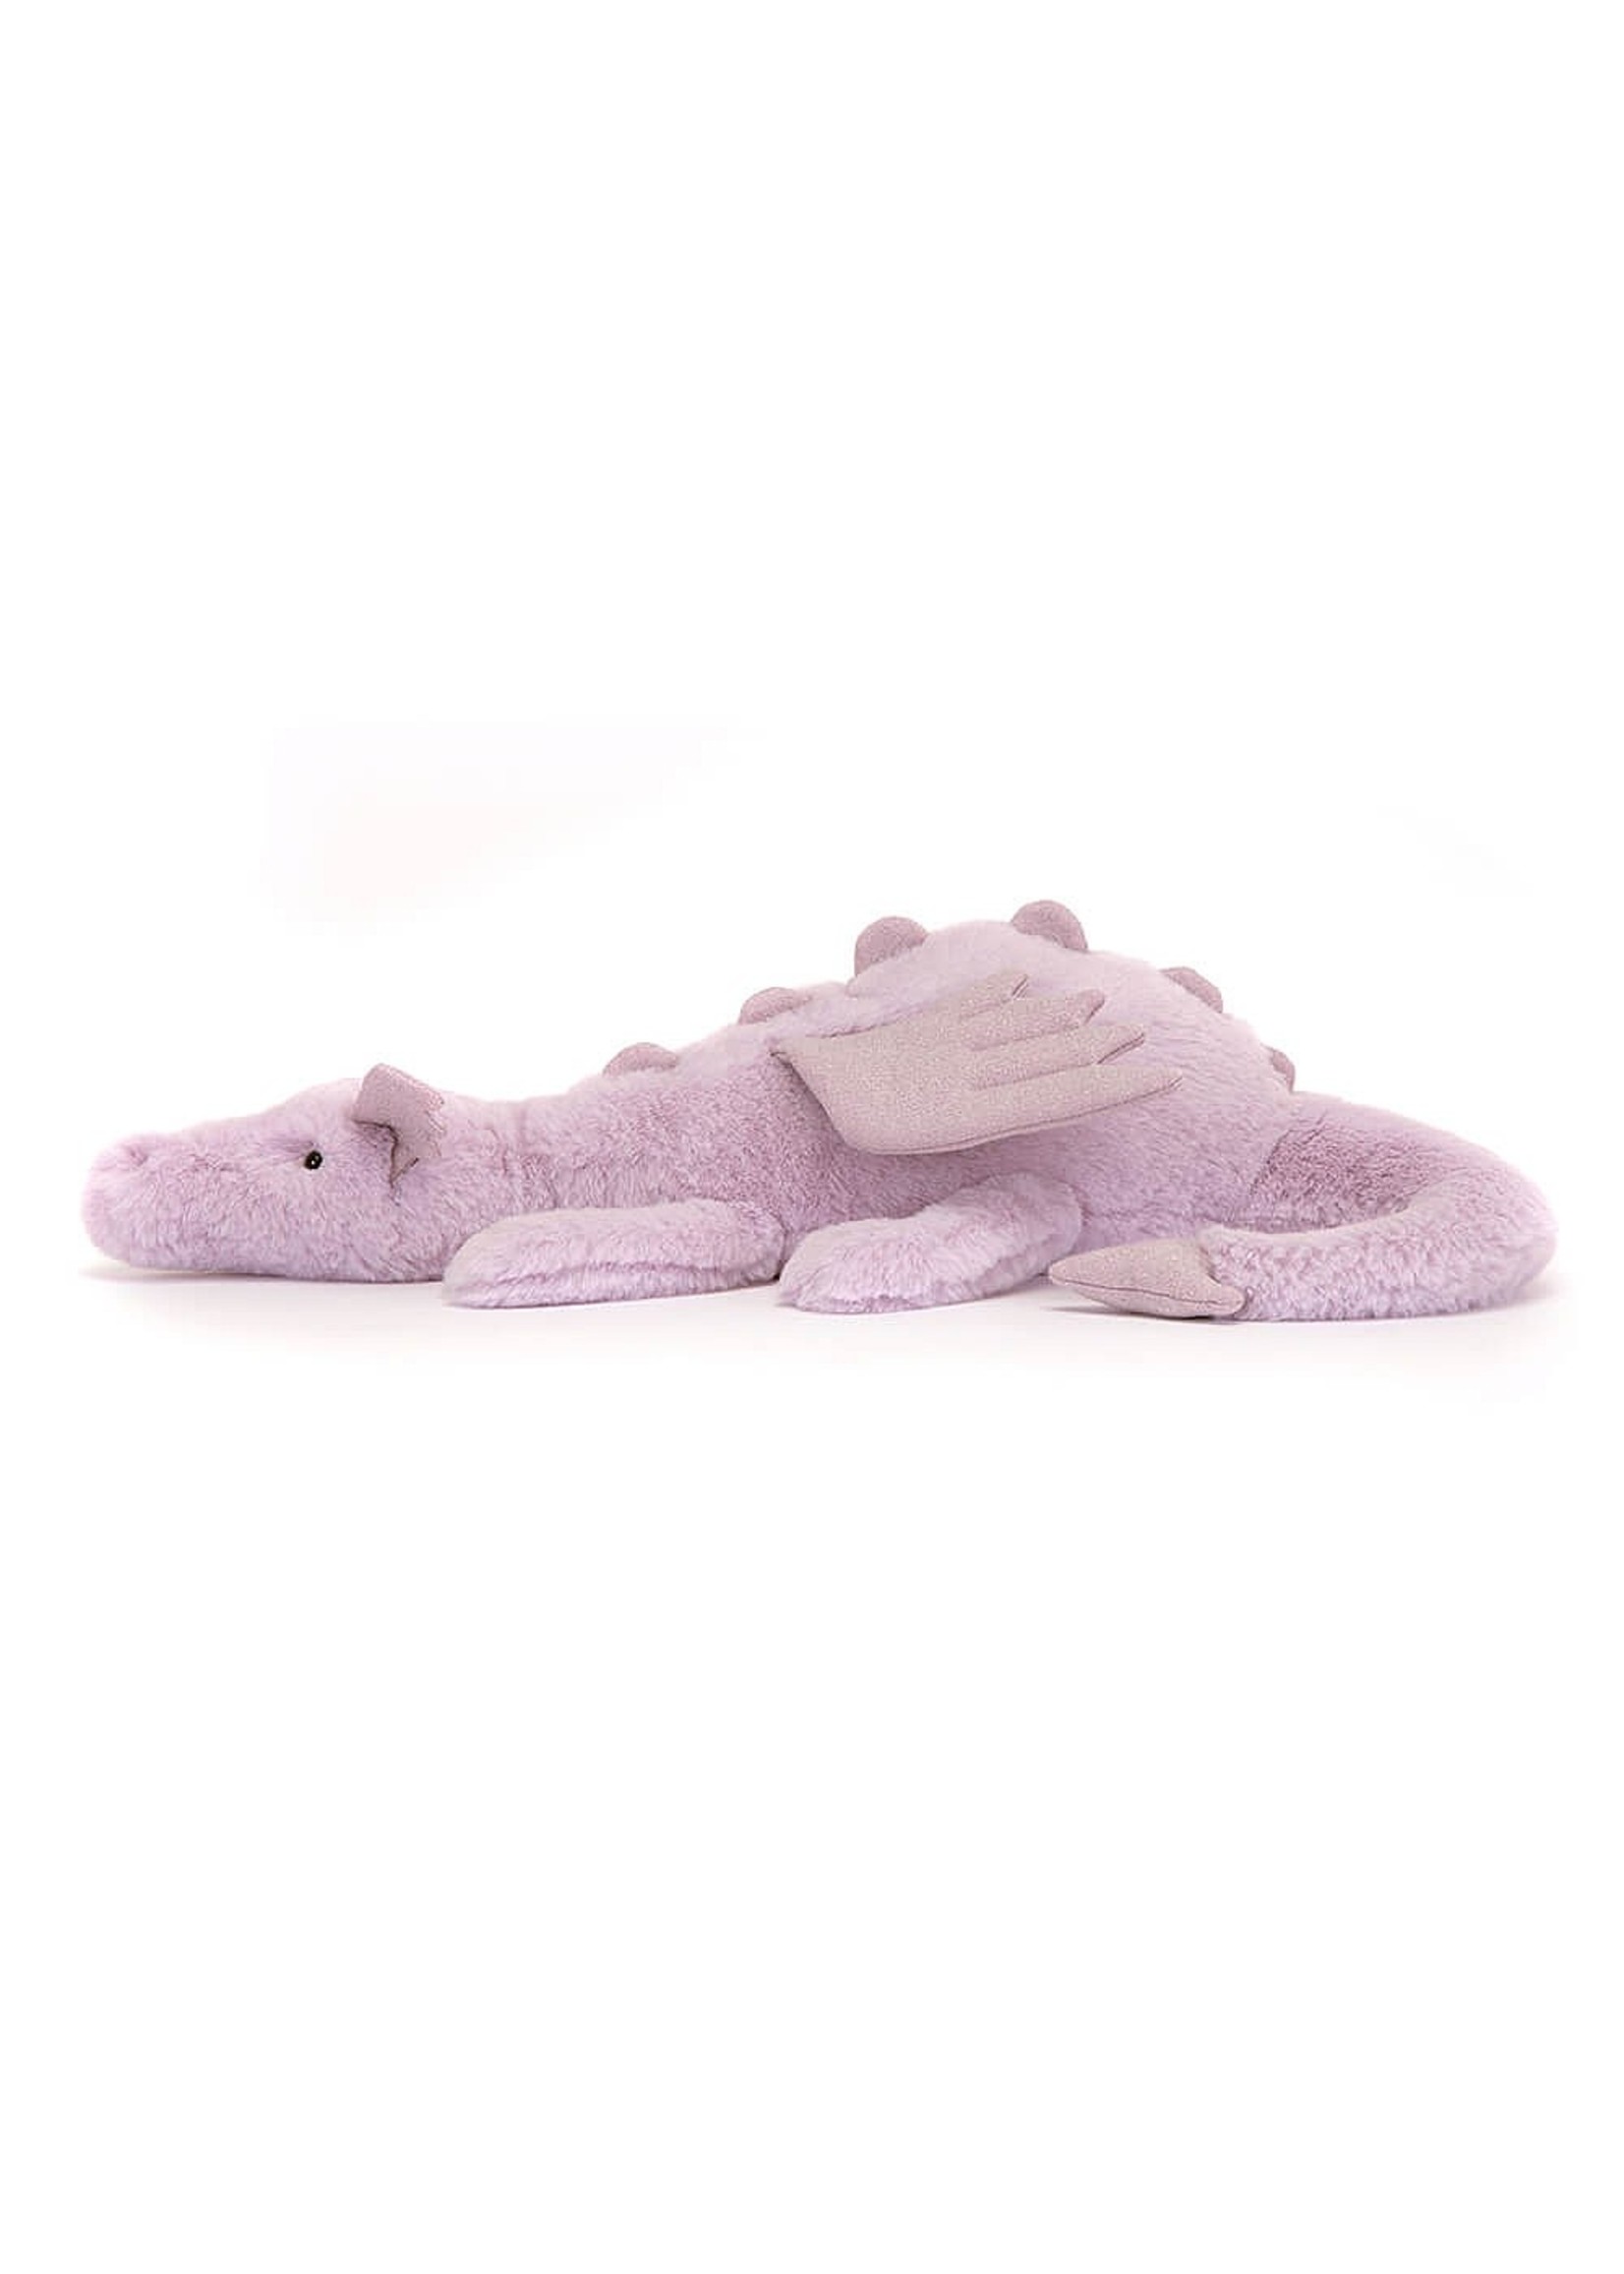 Jellycat Lavender Dragon - Large